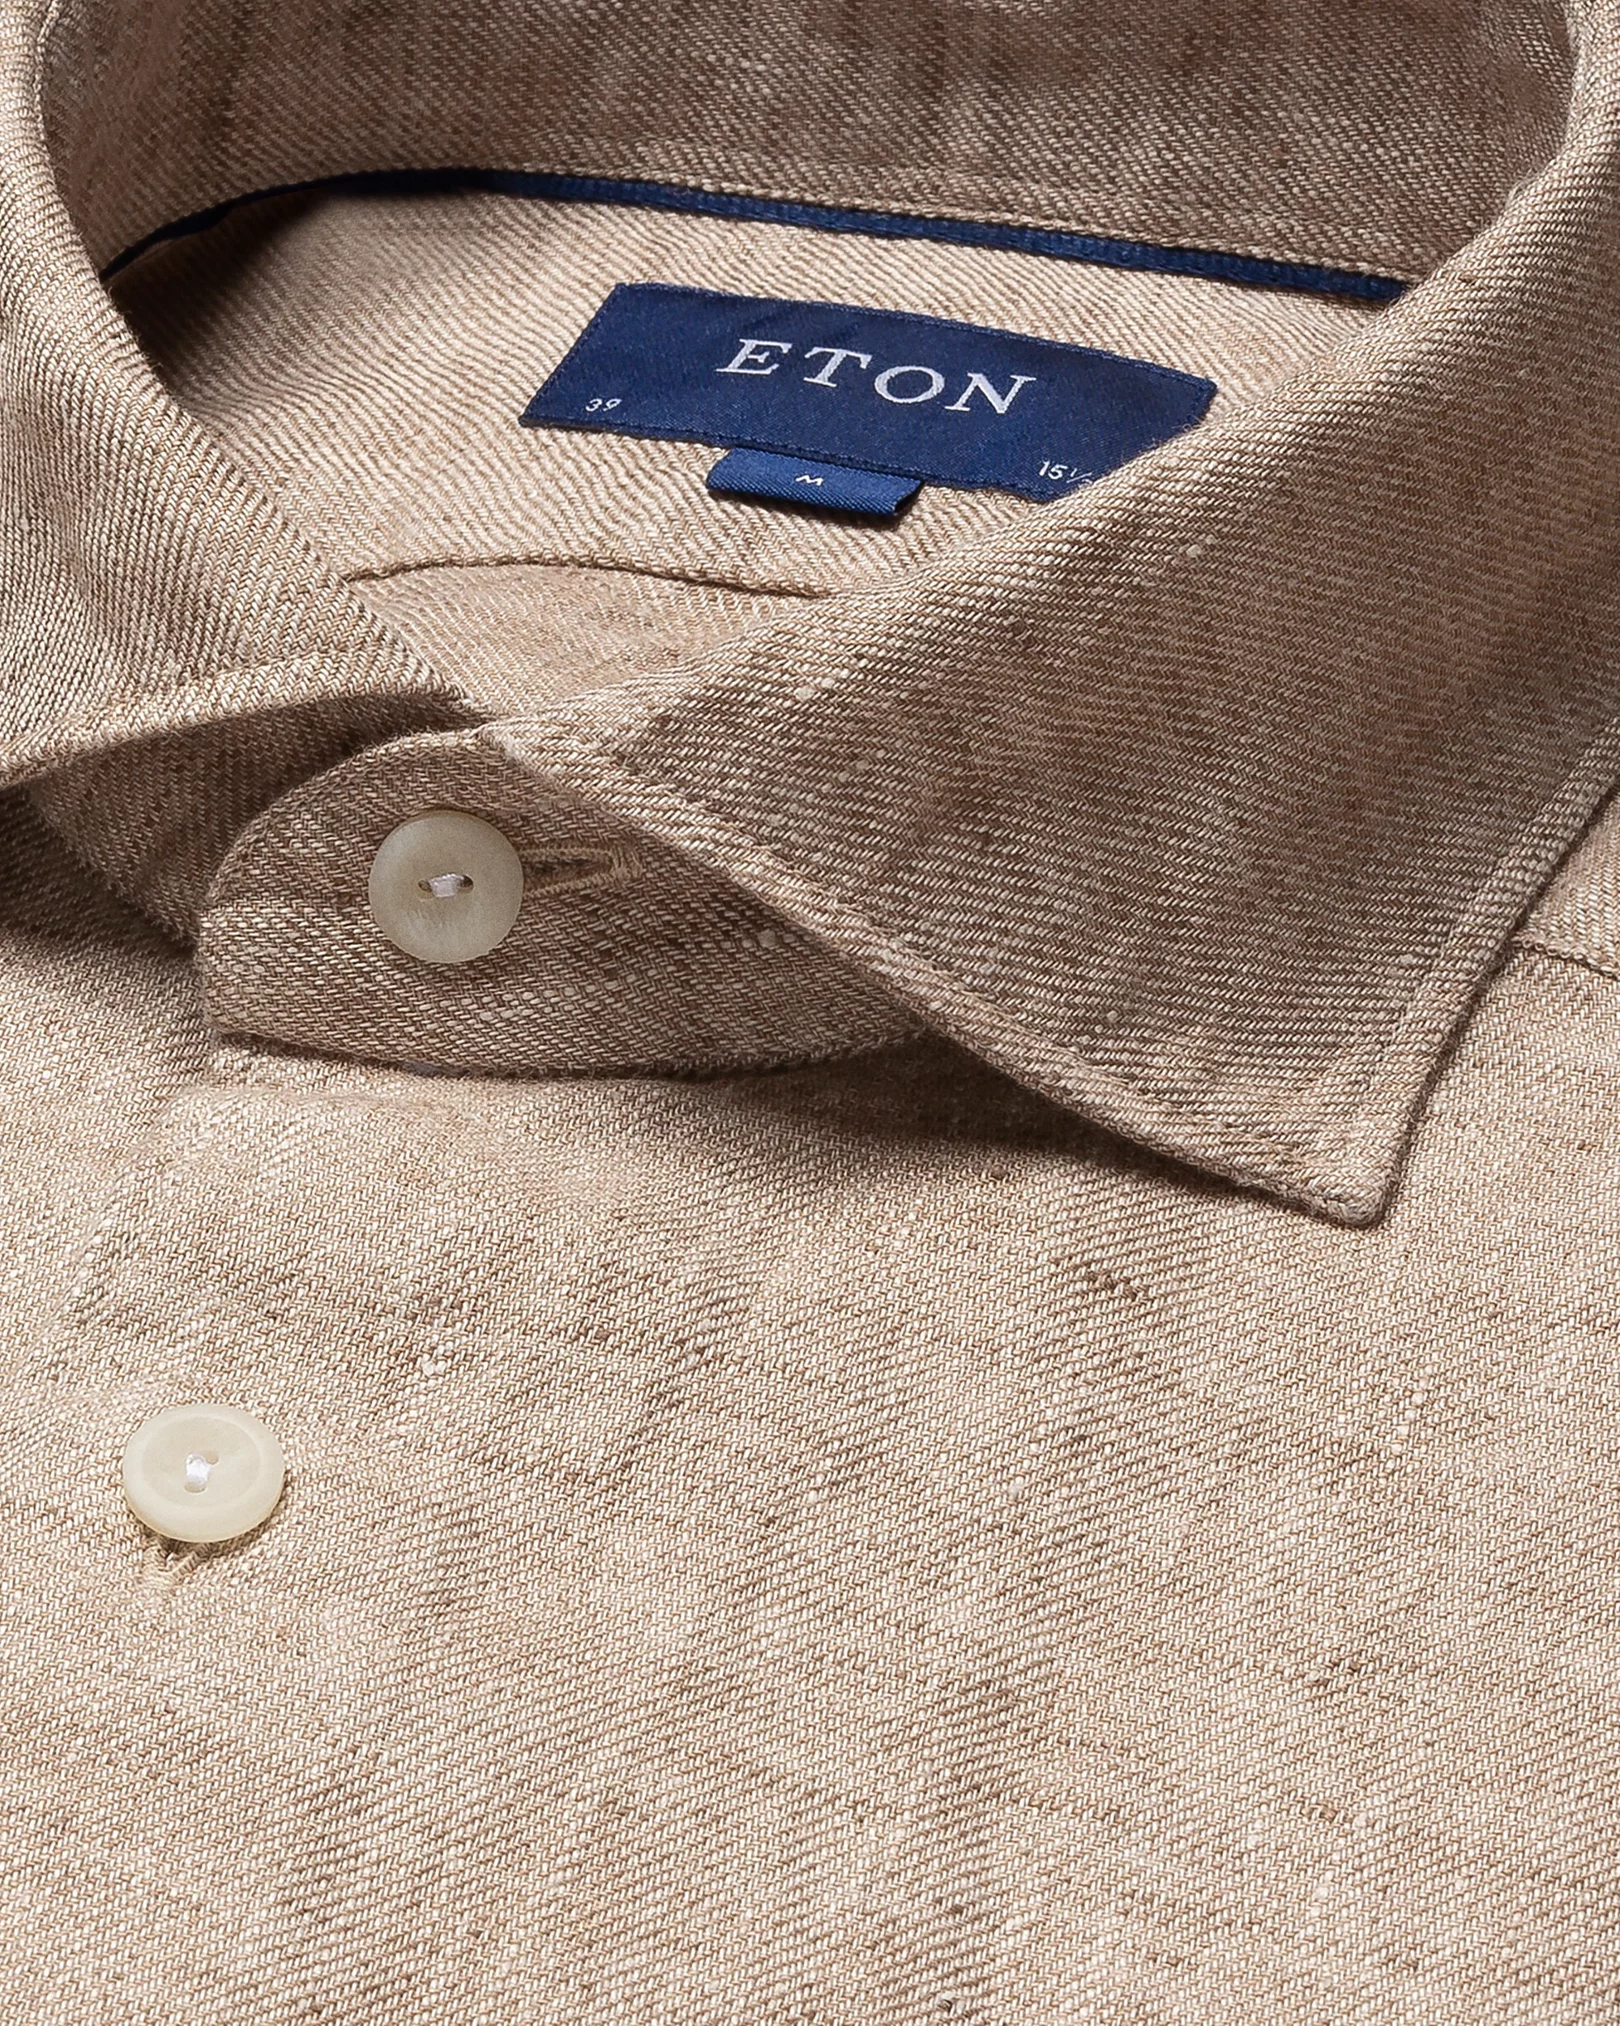 Eton - brown linen